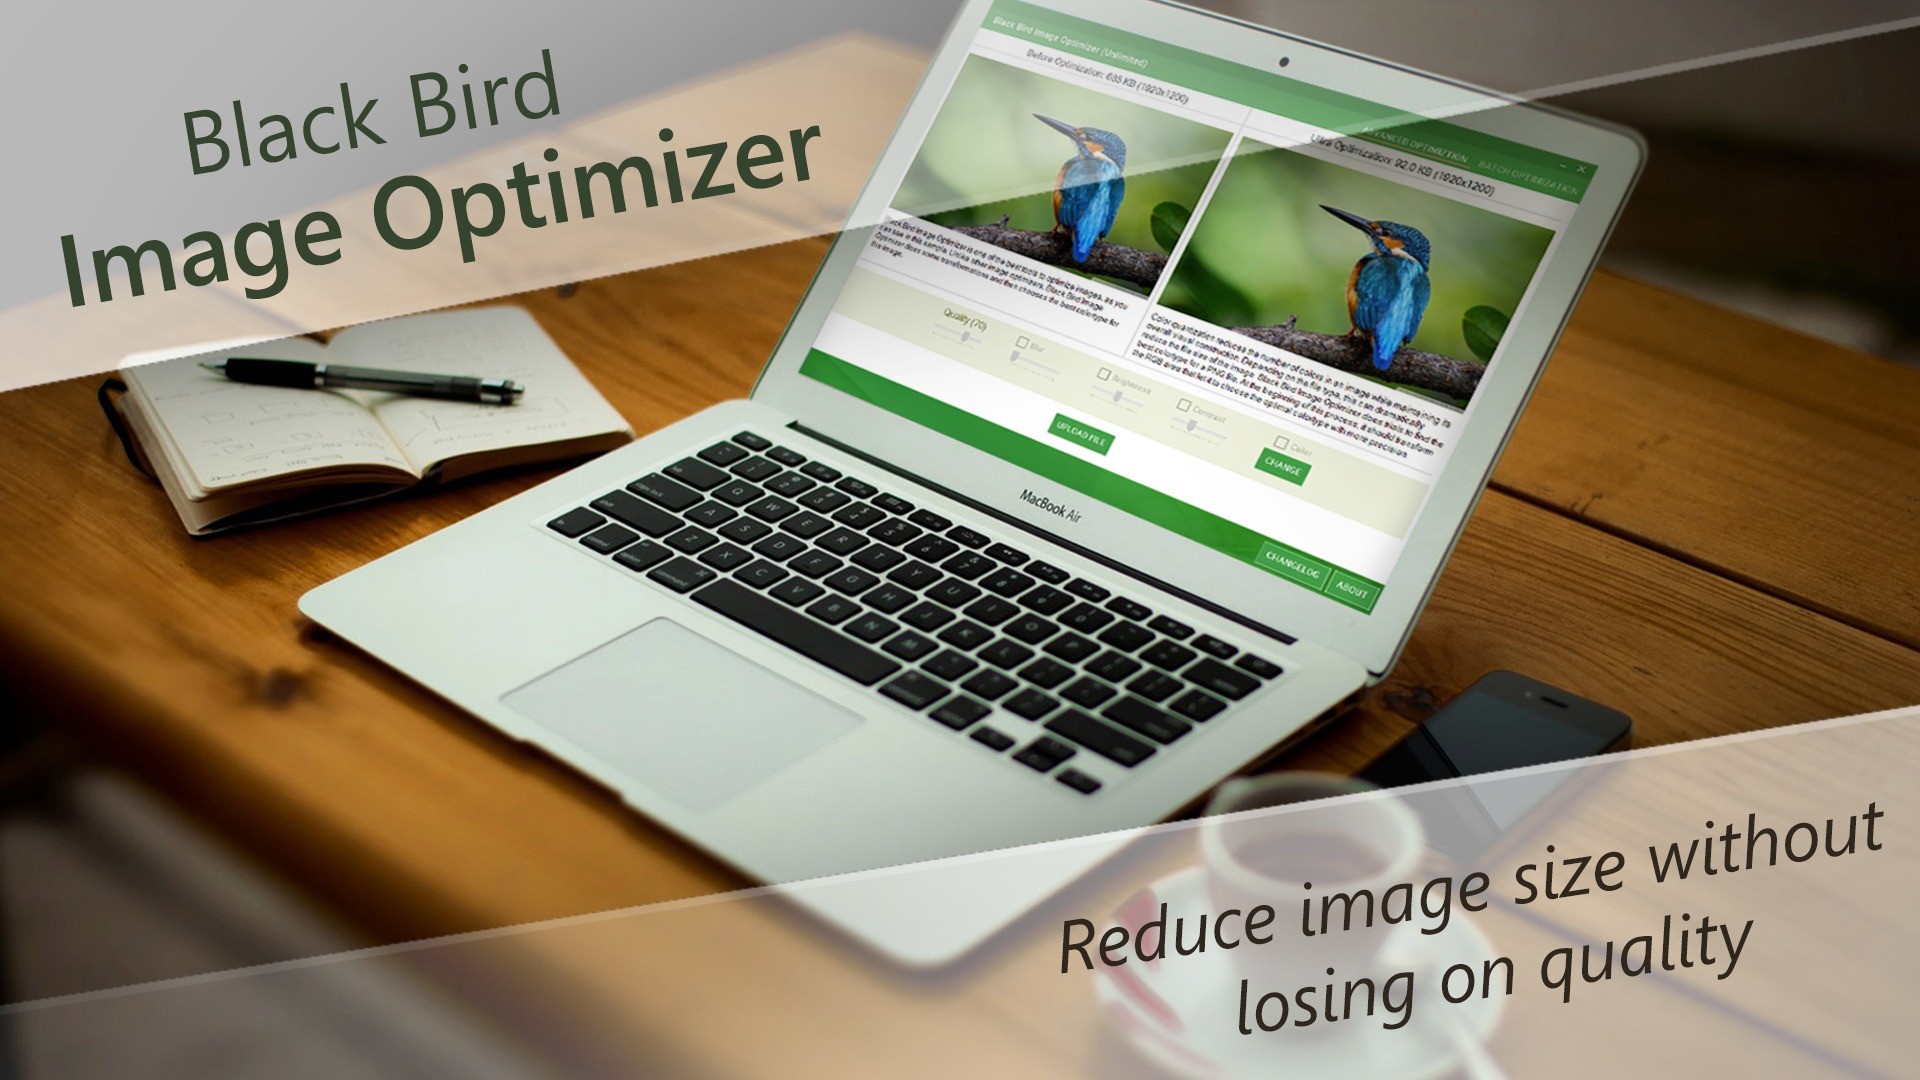 Black Bird Image Optimizer